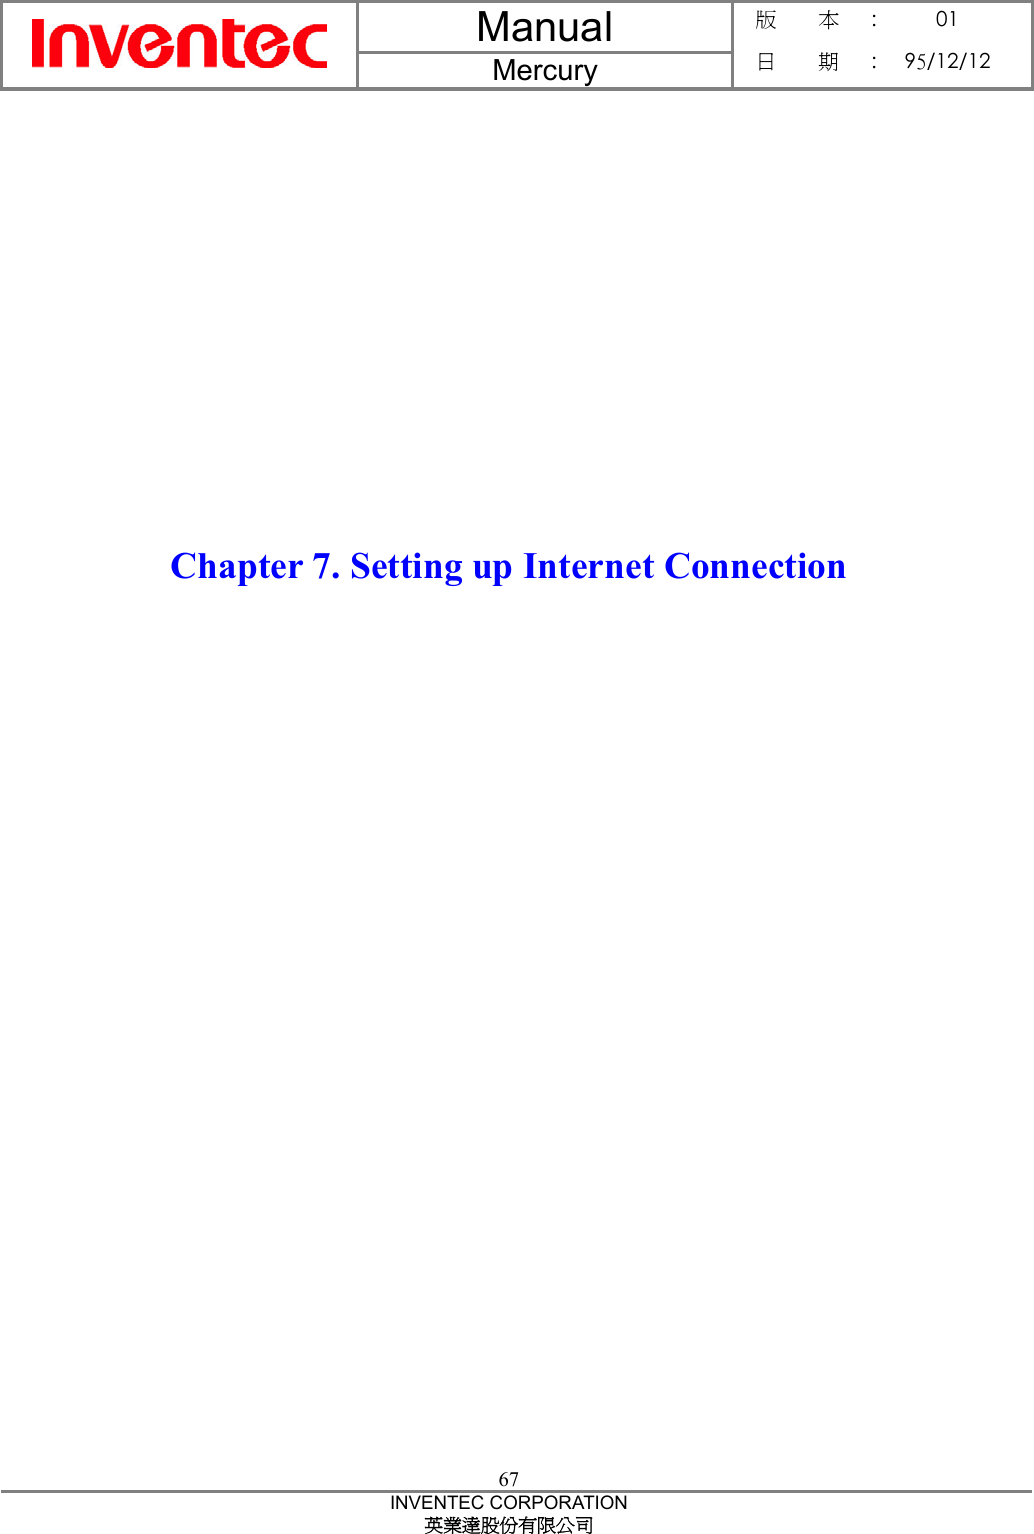 Manual  Mercury 版    本 :  01 日    期 : 95/12/12  67 INVENTEC CORPORATION 英業達股份有限公司             Chapter 7. Setting up Internet Connection 